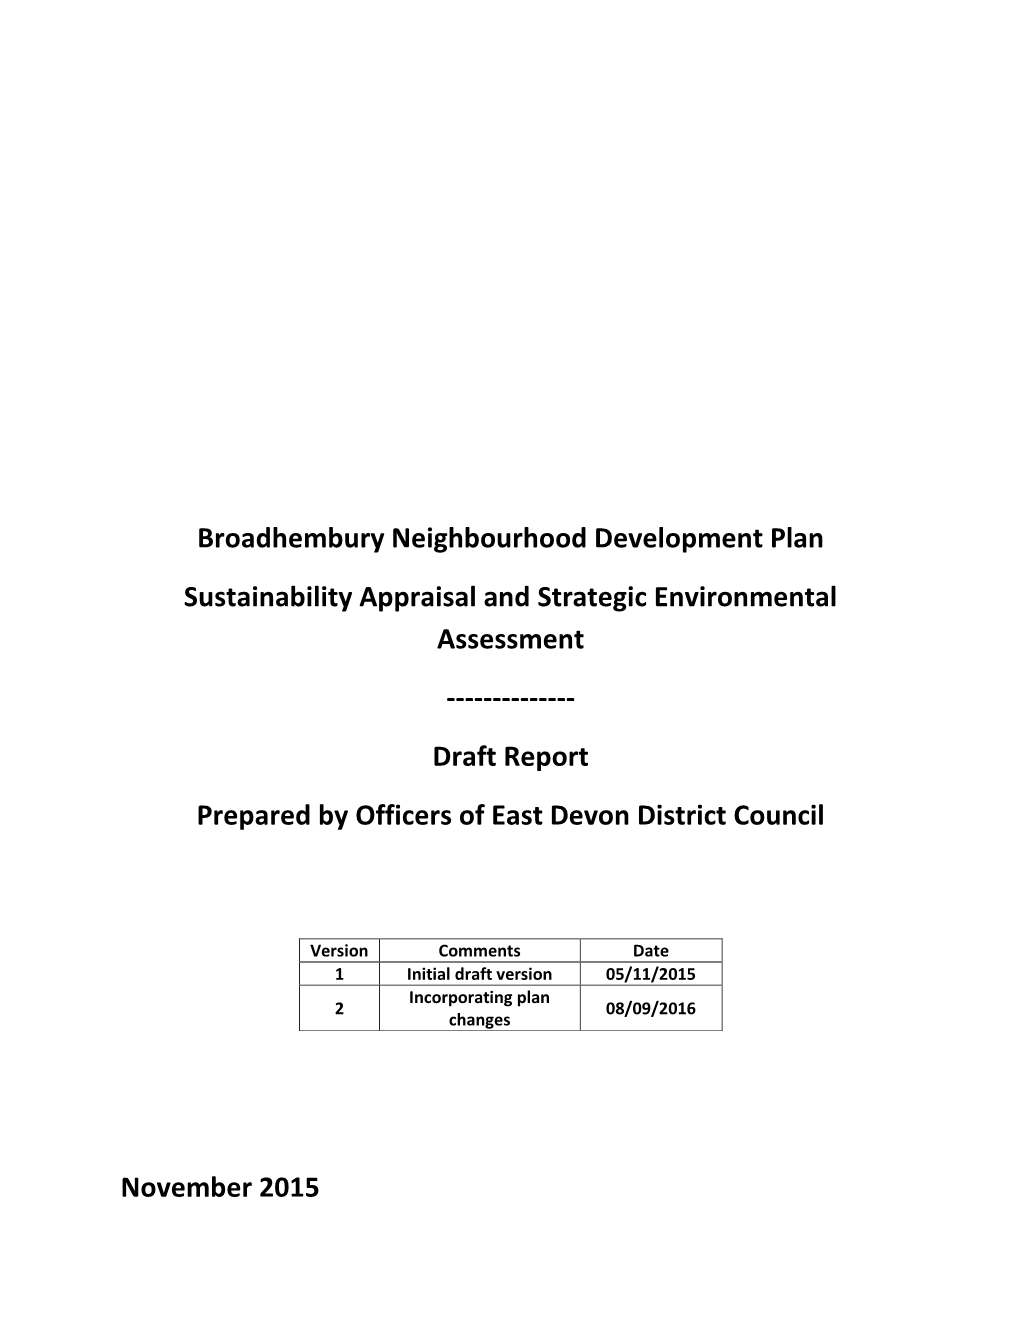 Broadhembury Neighbourhood Development Plan Sustainability Appraisal and Strategic Environmental Assessment